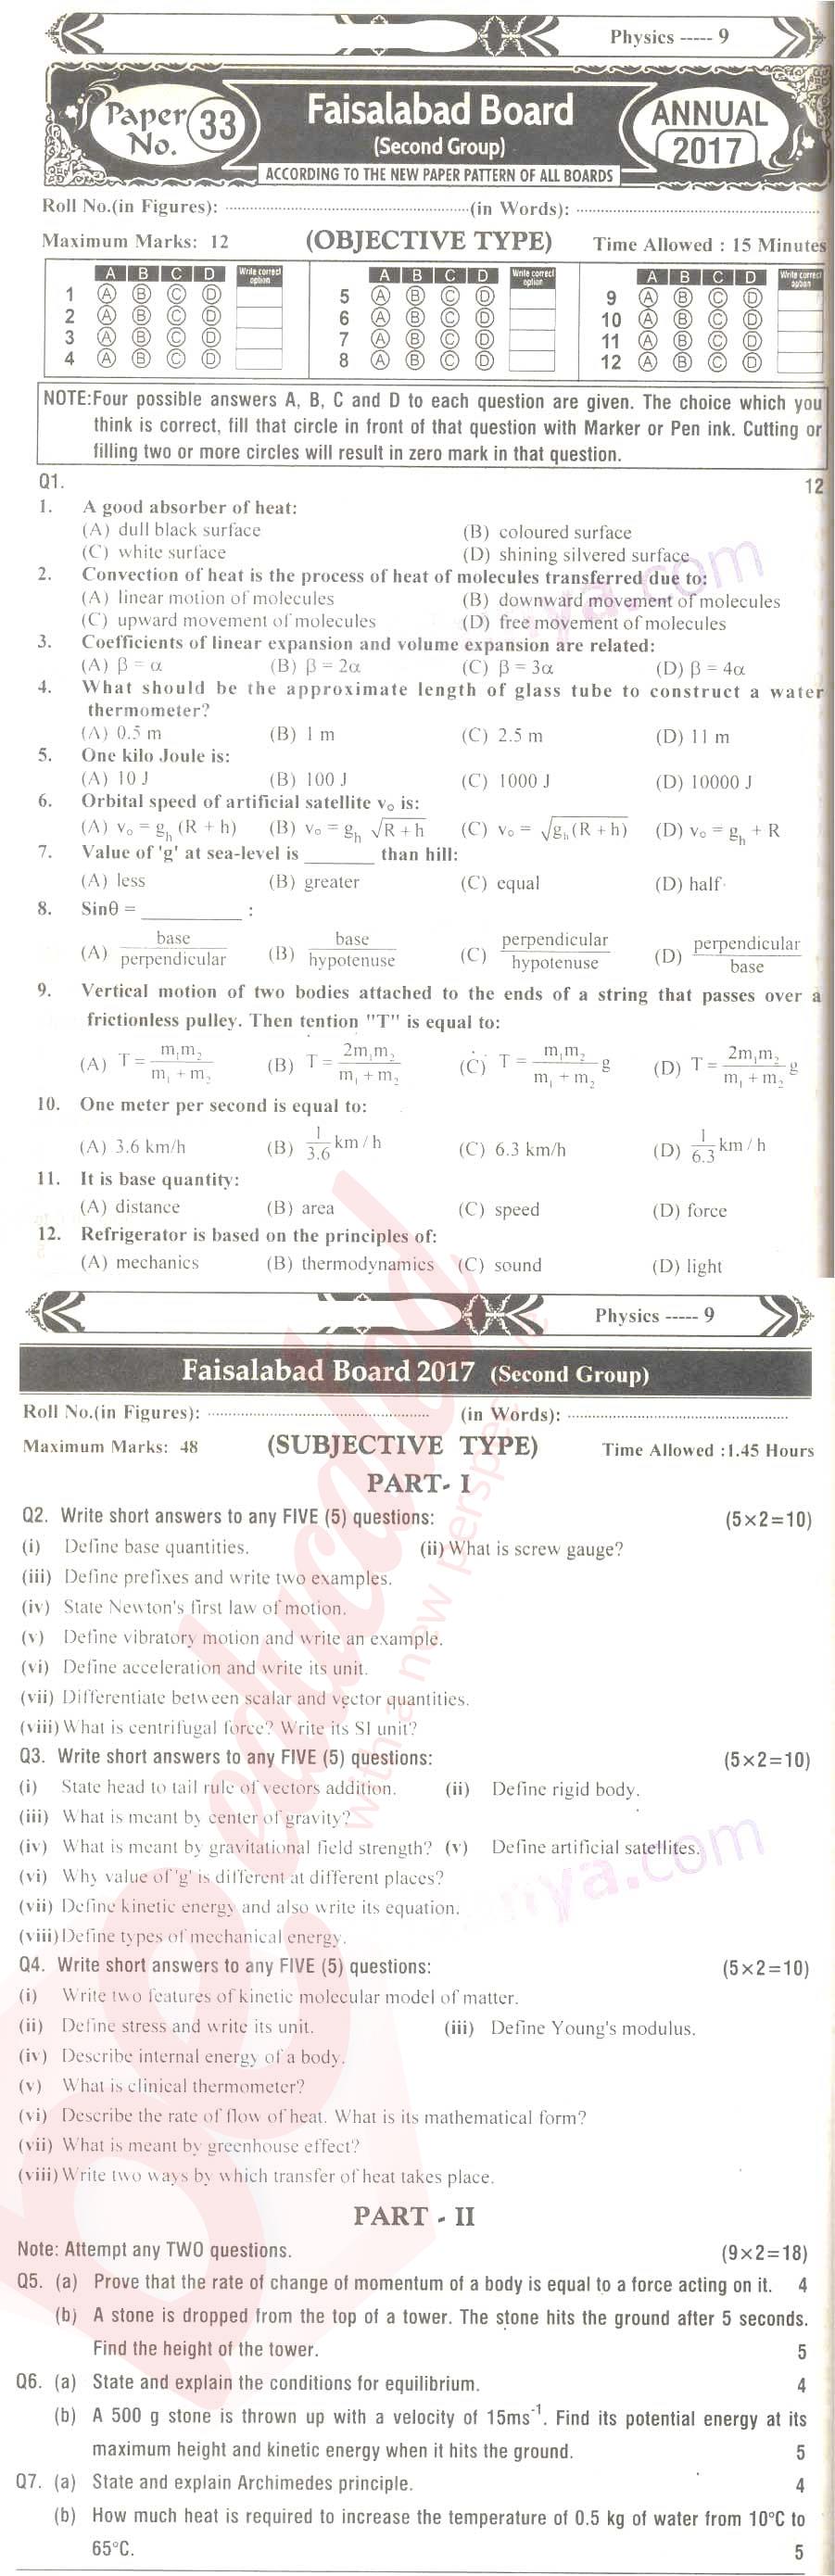 Physics 9th English Medium Past Paper Group 2 BISE Faisalabad 2017